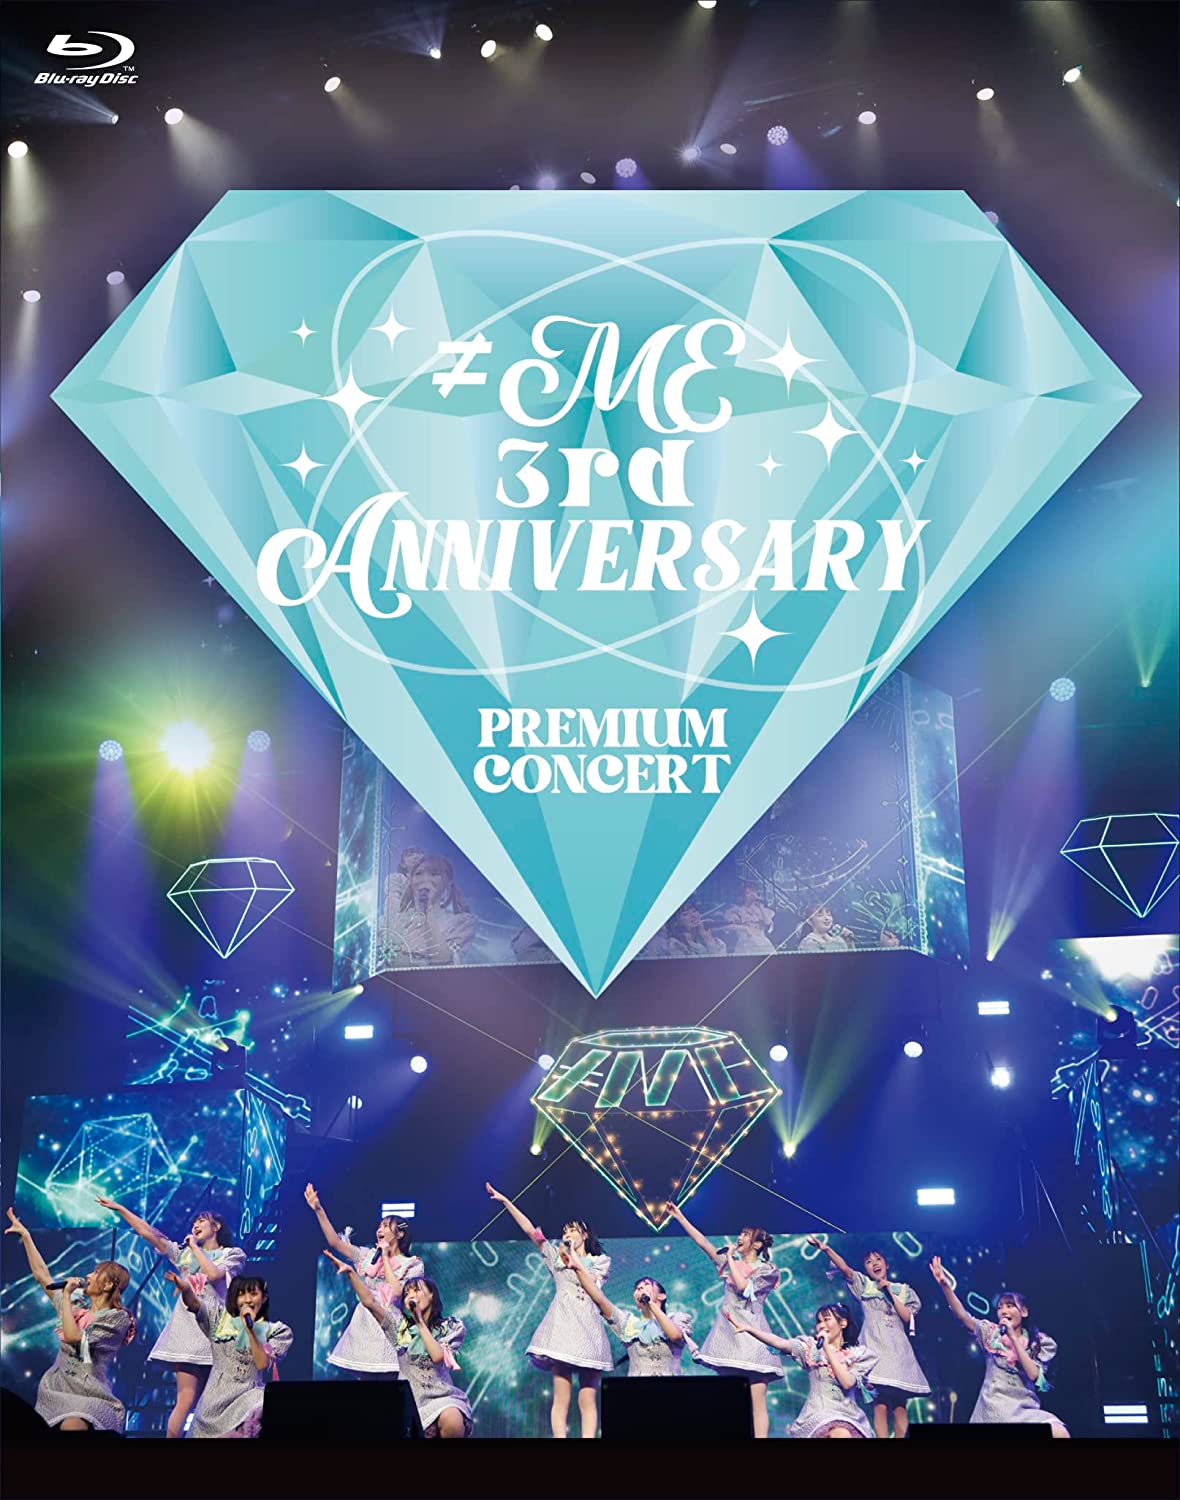 LOVE 3rd Anniversary Premium Concert hosoho.jp